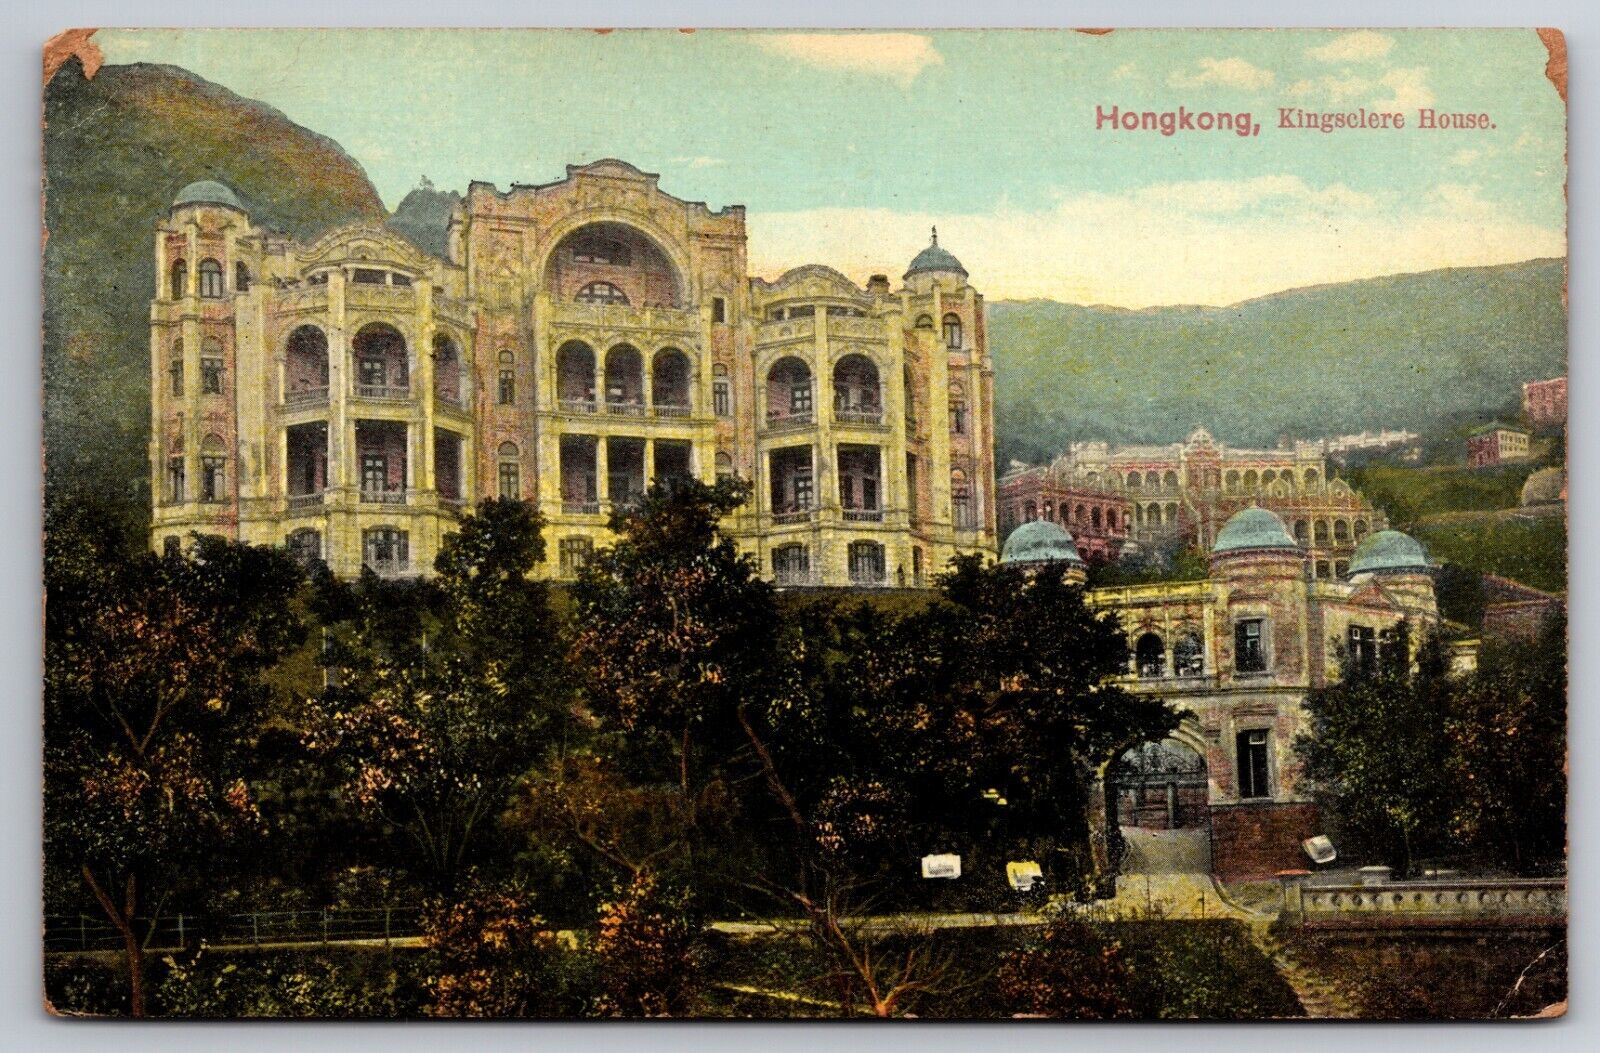 Kingsclere House Hong Kong China c1910 Postcard